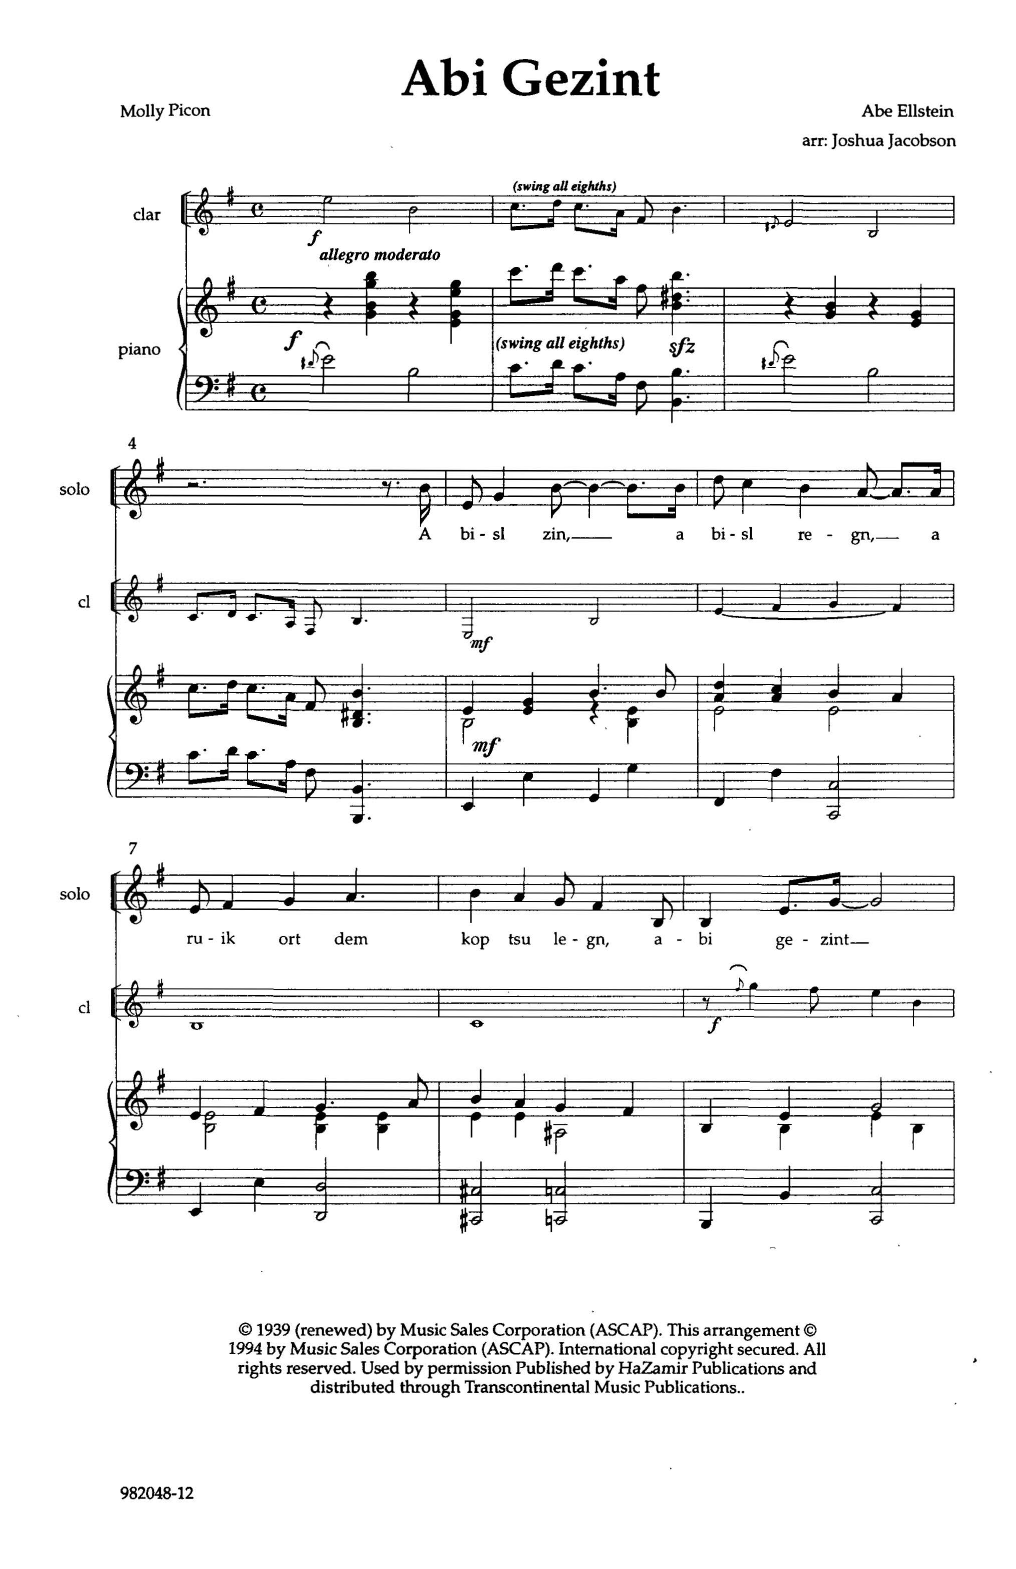 Abe Ellstein Abi Gezint (arr. Joshua Jacobson) Sheet Music Notes & Chords for SATB Choir - Download or Print PDF